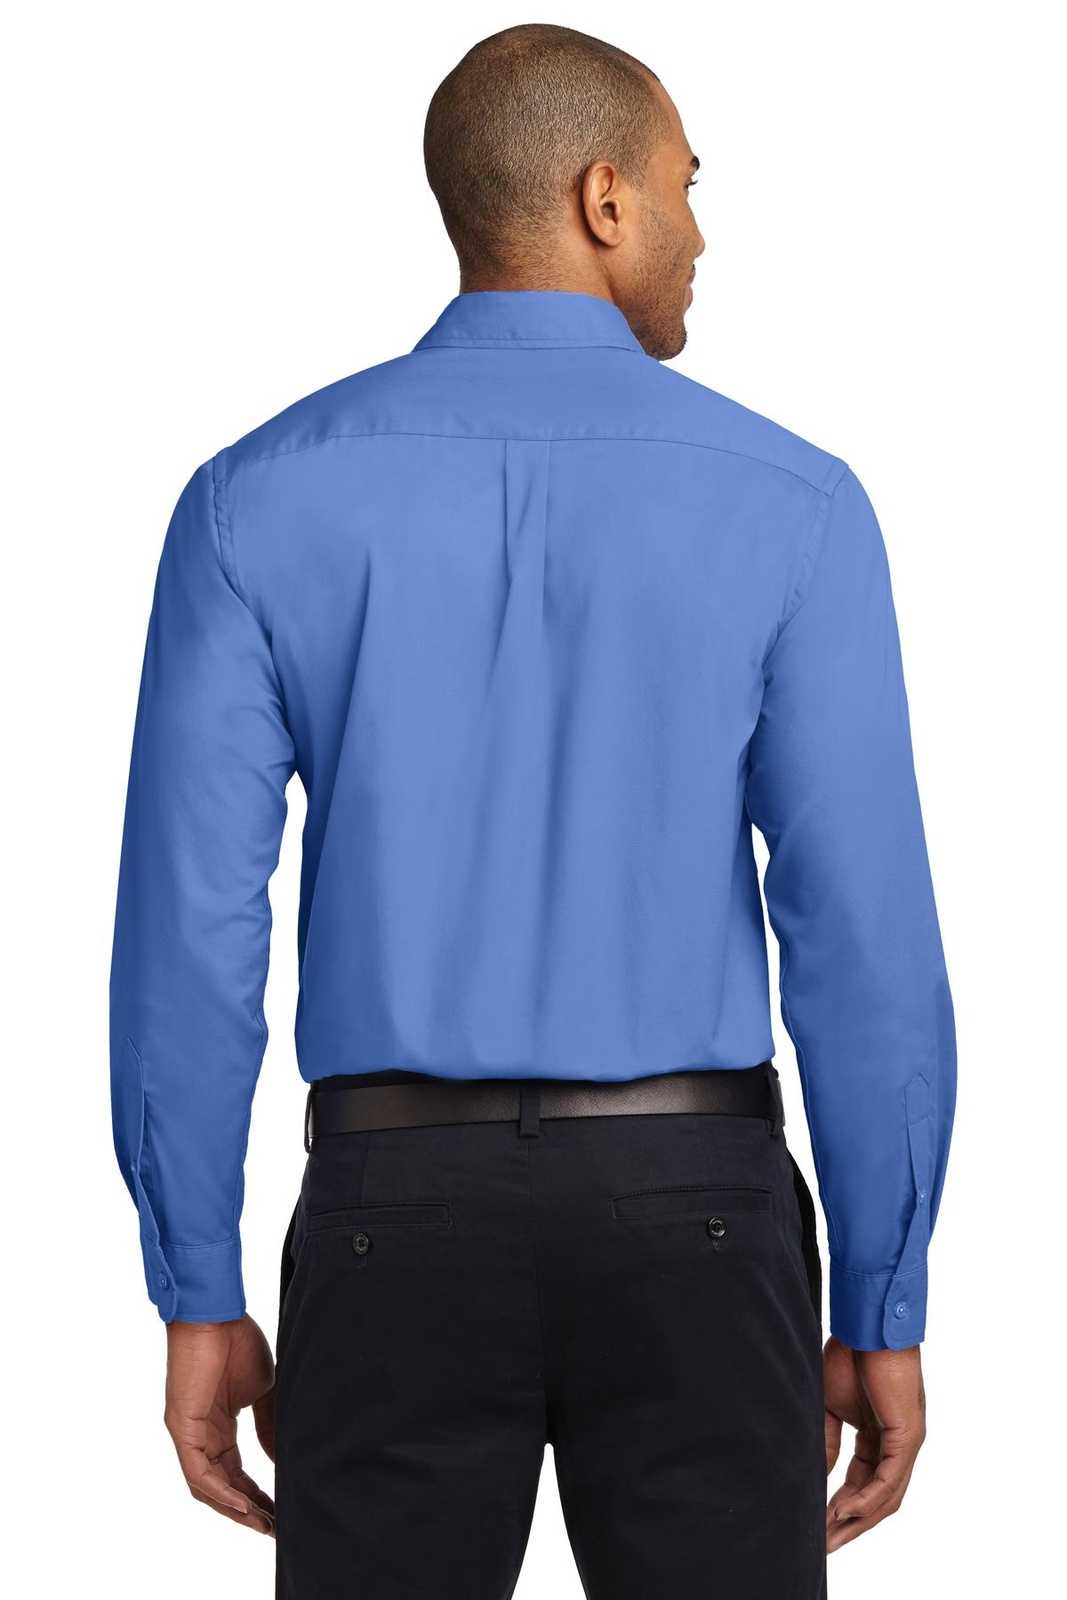 Port Authority S608 Long Sleeve Easy Care Shirt - Ultramarine Blue - HIT a Double - 2